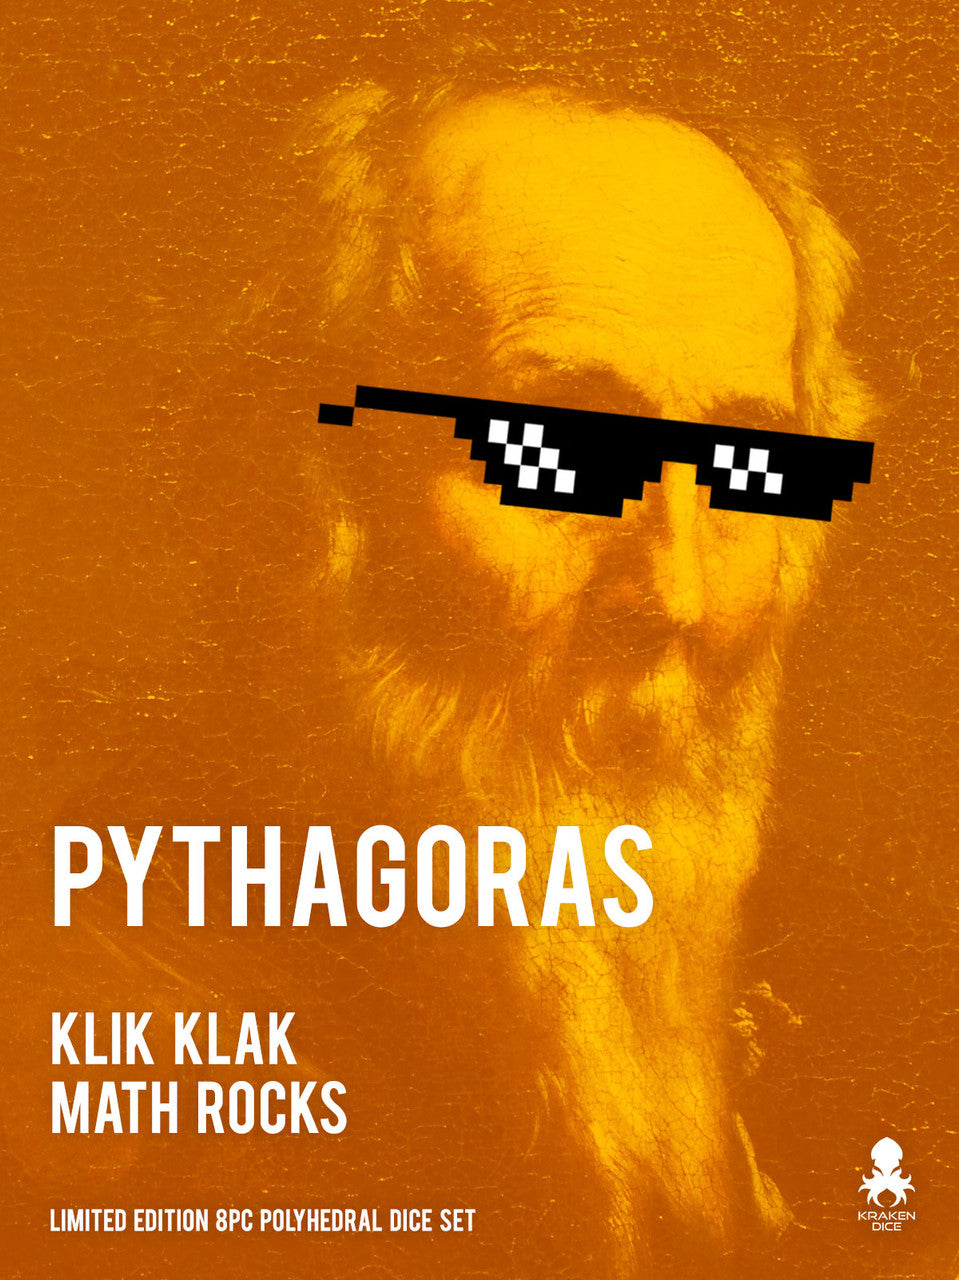 Pythagoras: Klik Klak Math Rocks Limited Edition 8pc Polyhedral Dice Set